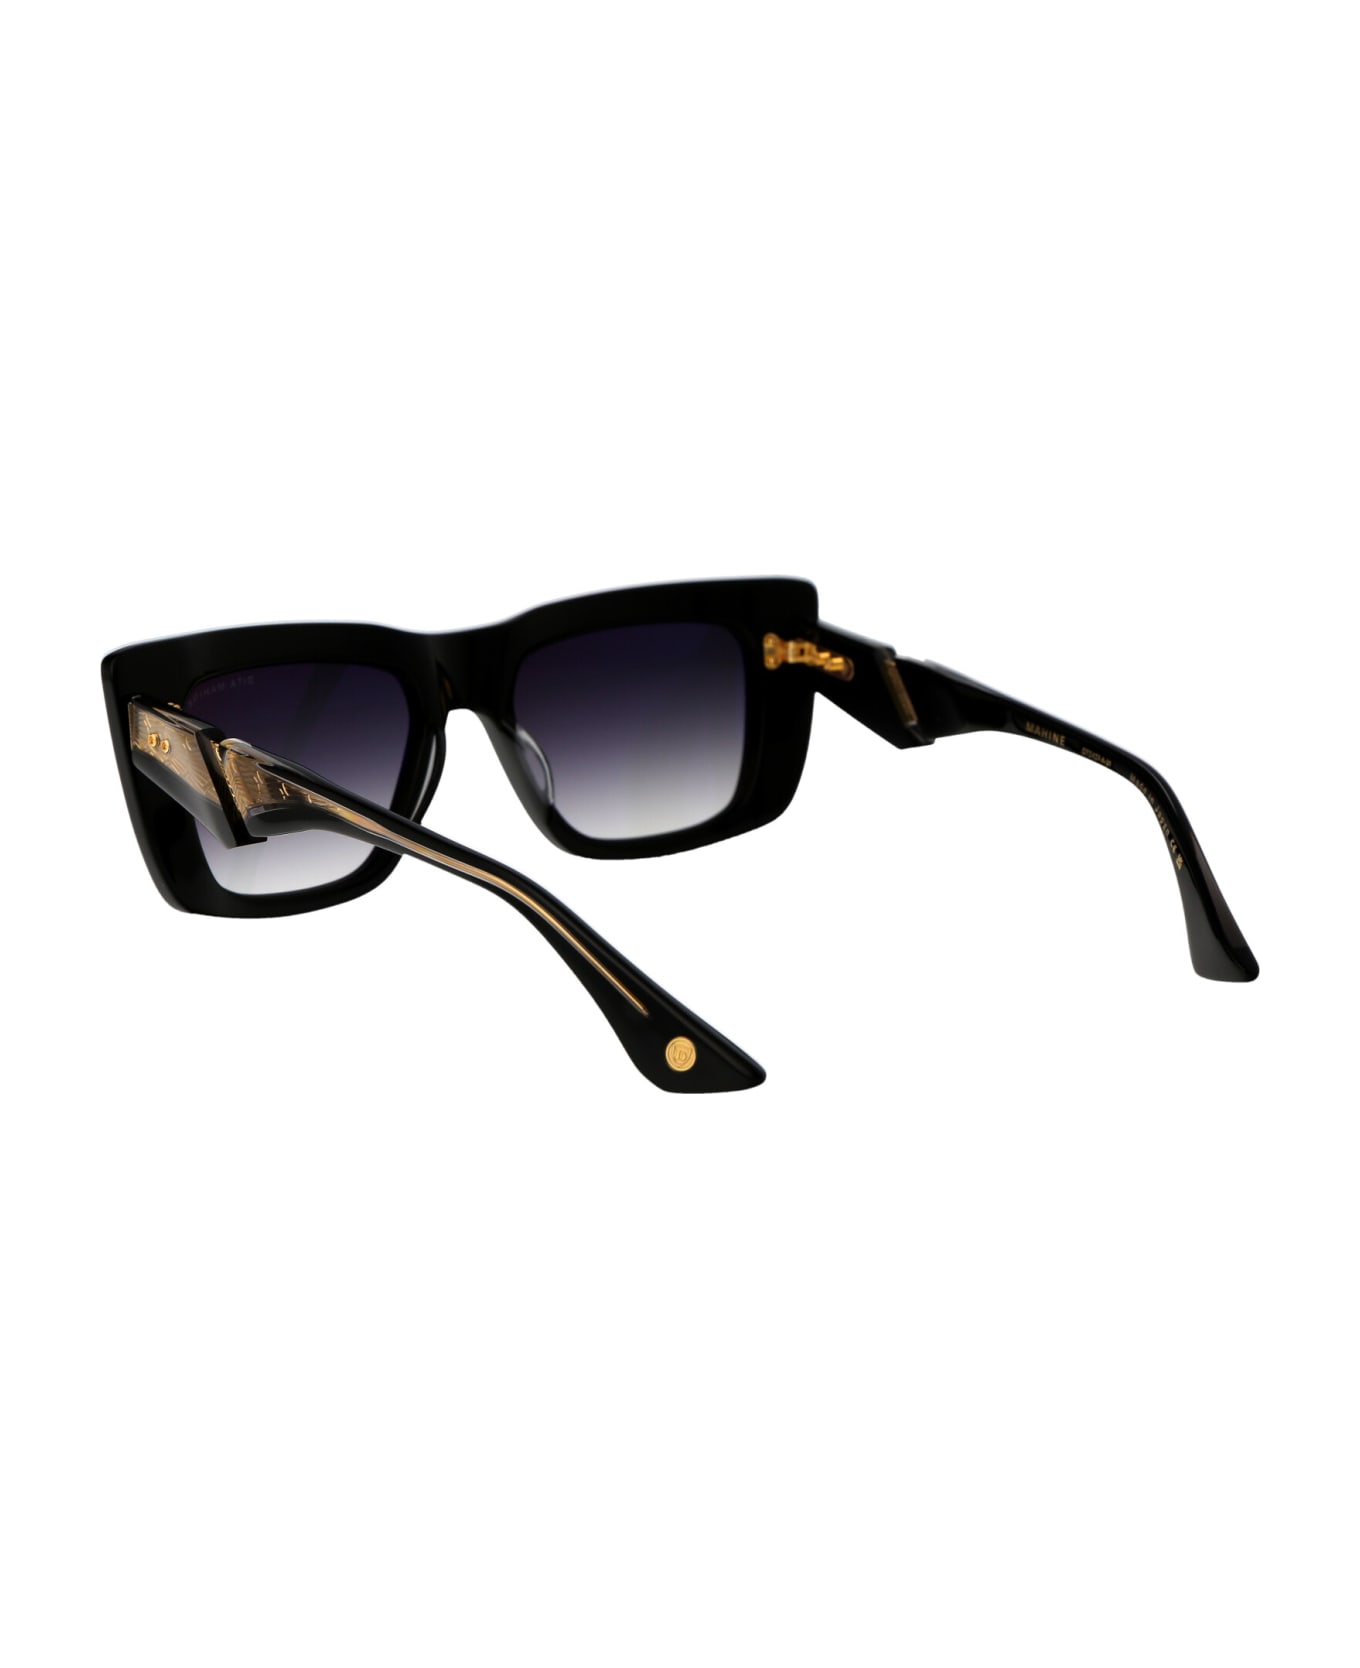 Dita Mahine Sunglasses - 01 BLACK - YELLOW GOLD W/ GREY TO CLEAR GRADIENT